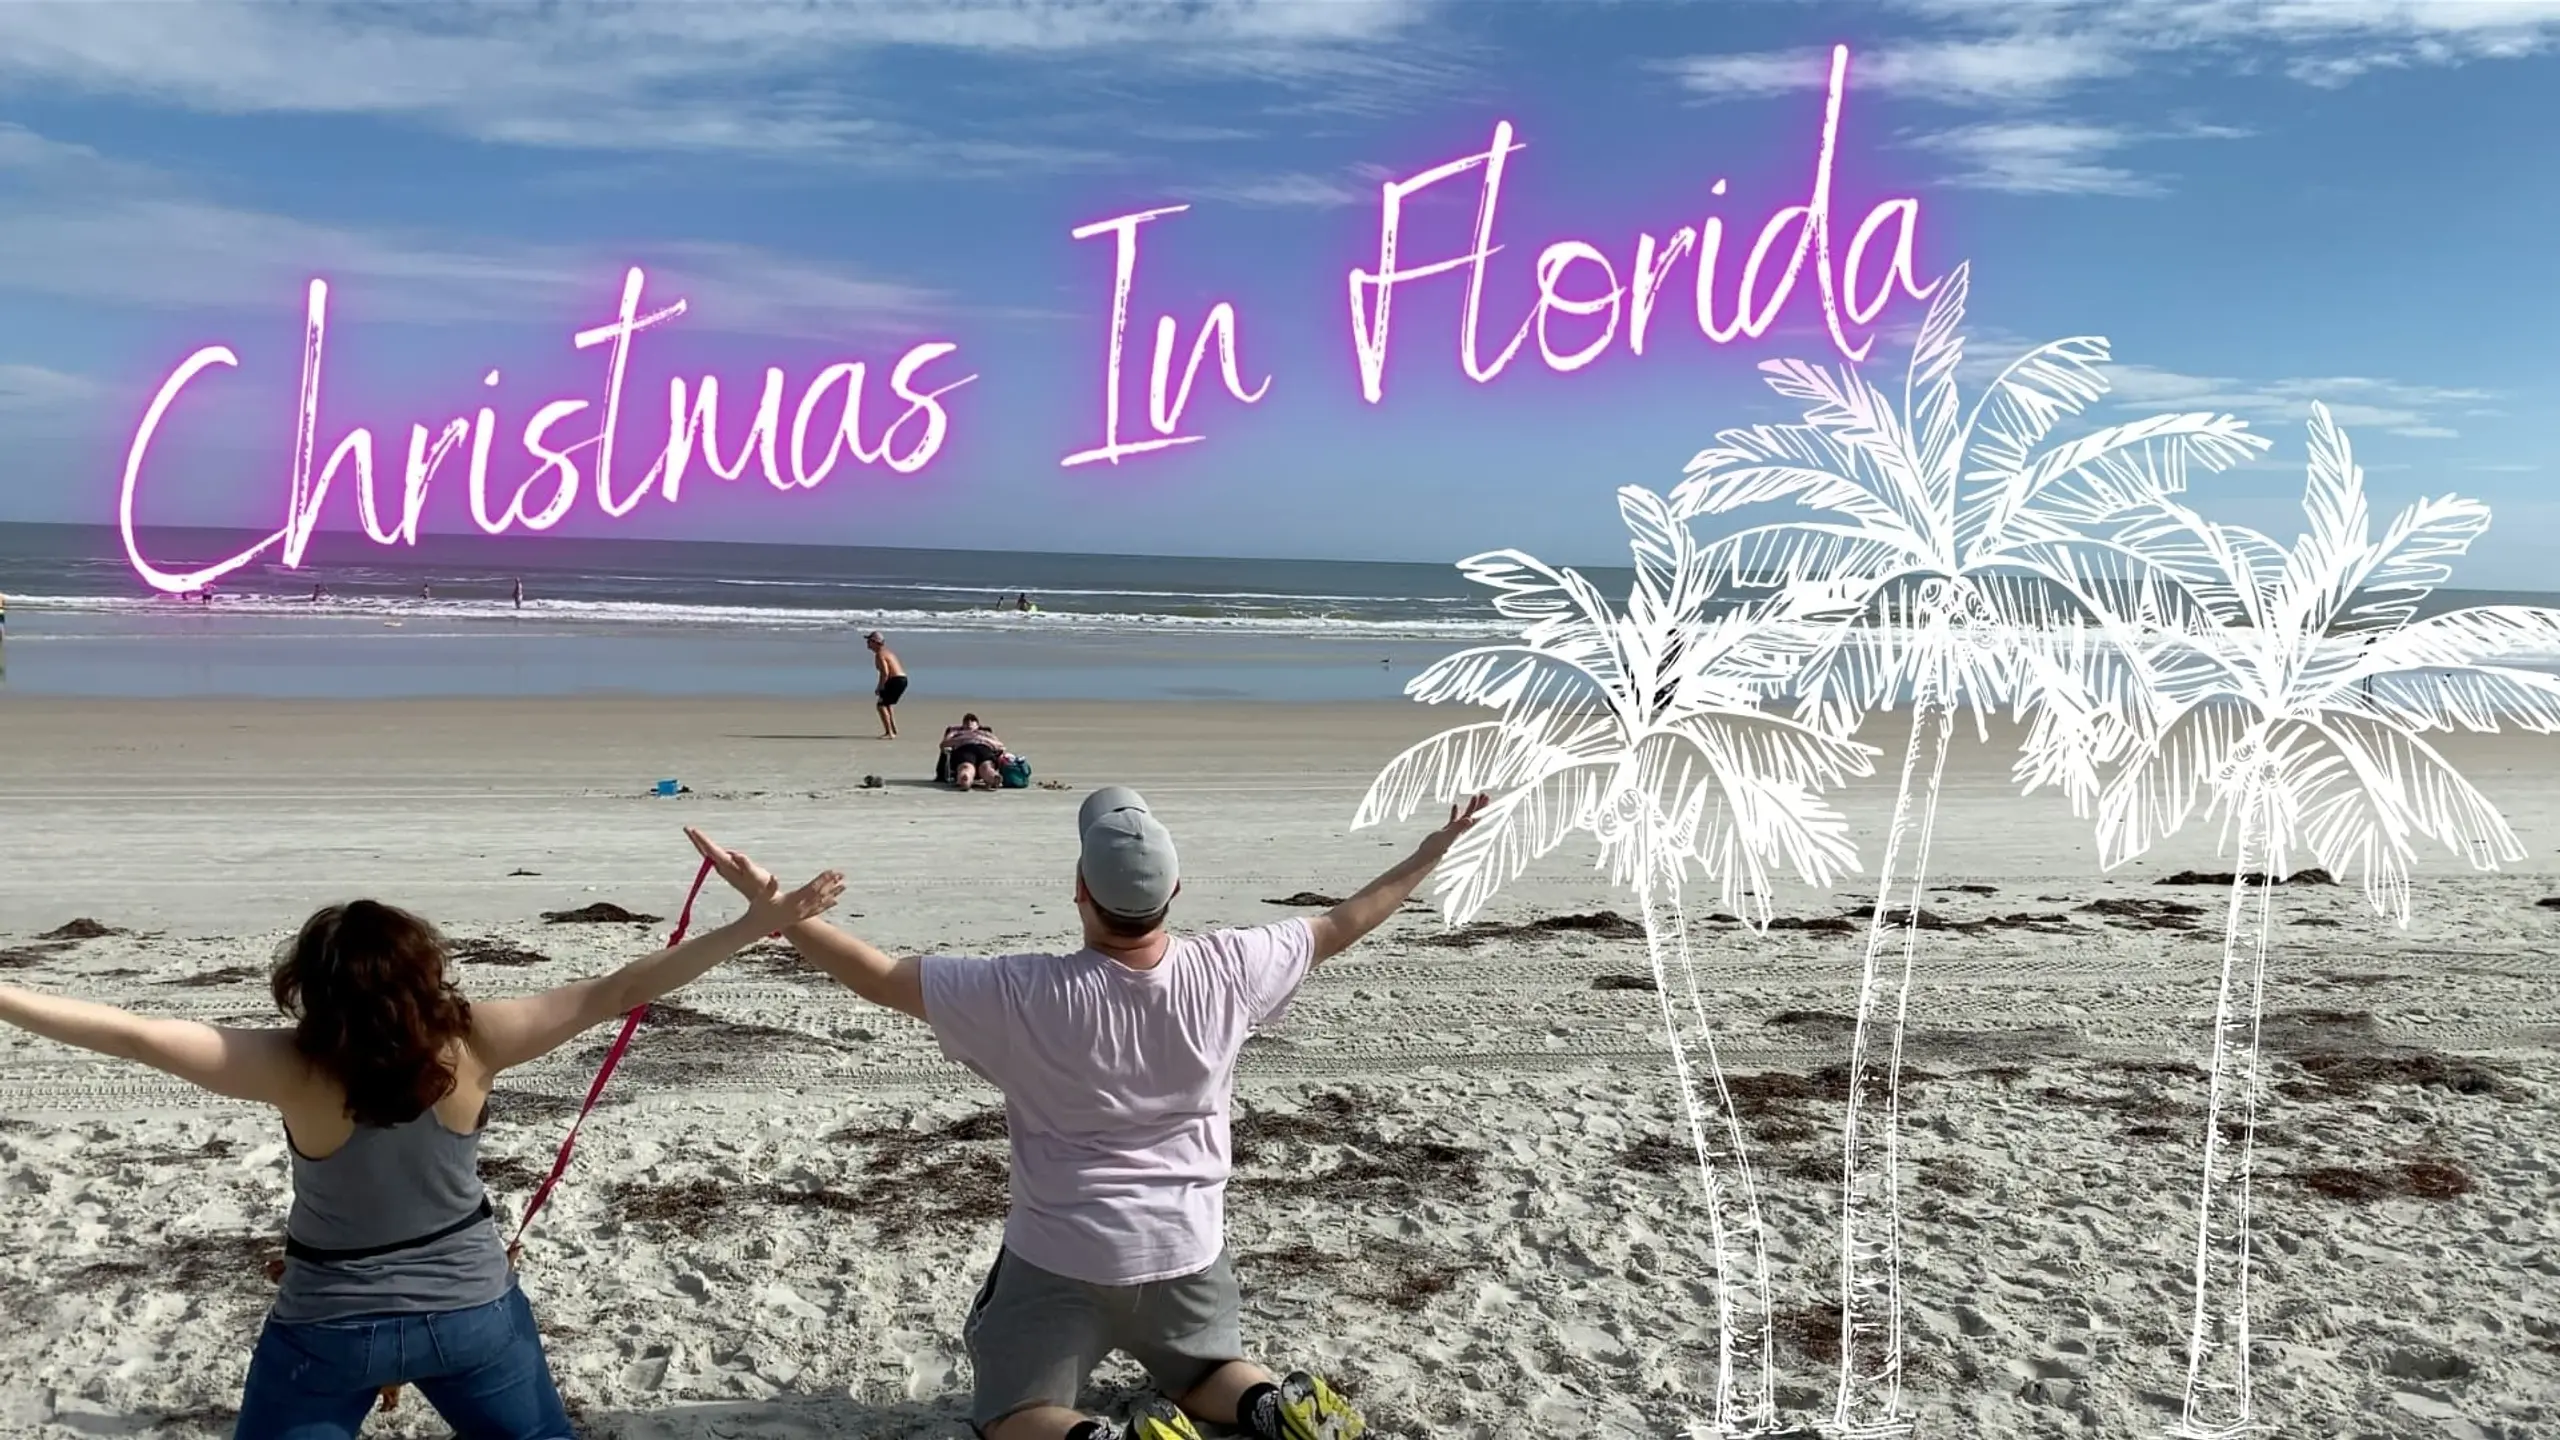 Christmas In Florida